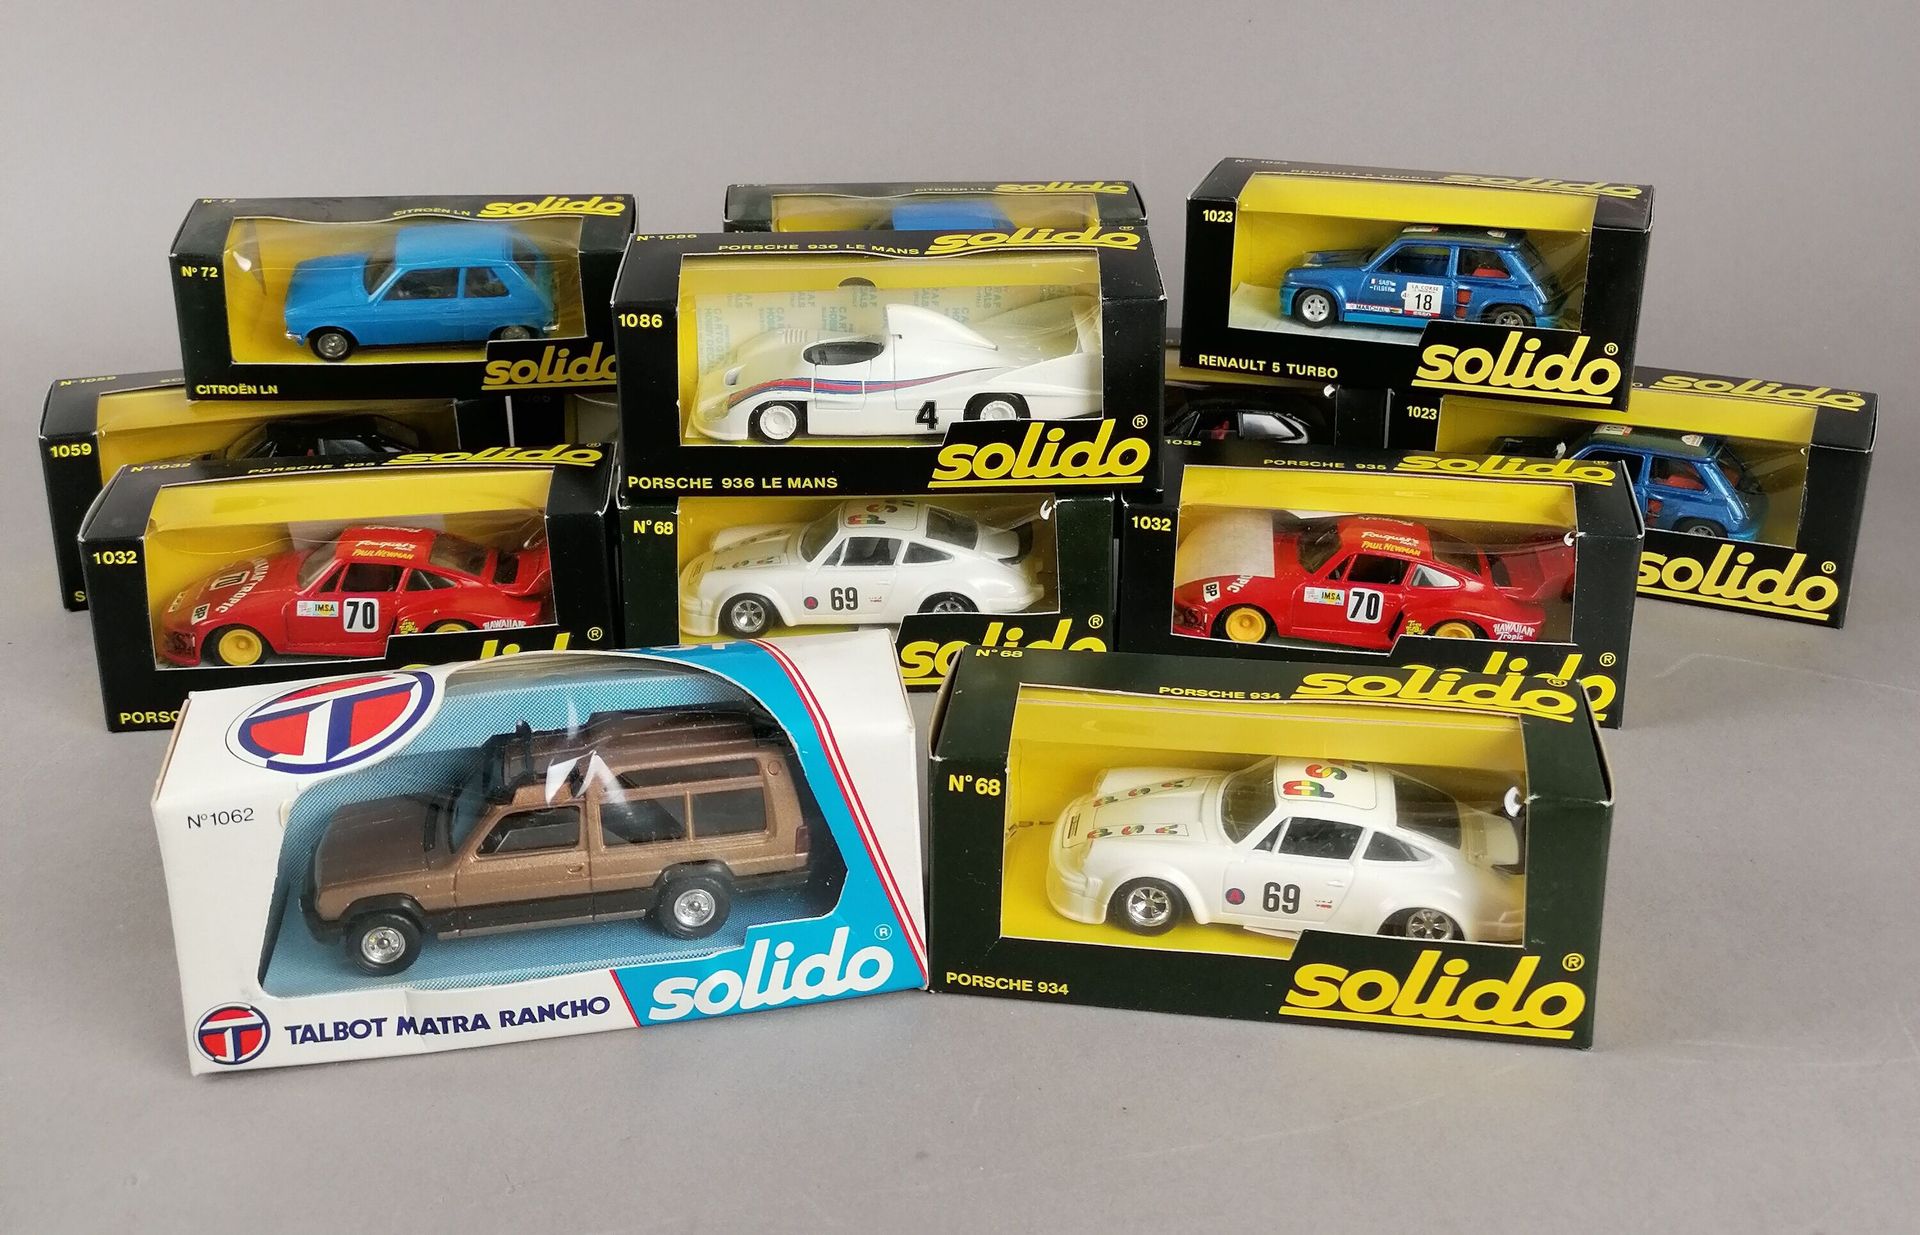 Null SOLIDO - 22 Fahrzeuge im Maßstab 1:43 in der Originalverpackung:

2x Jaguar&hellip;